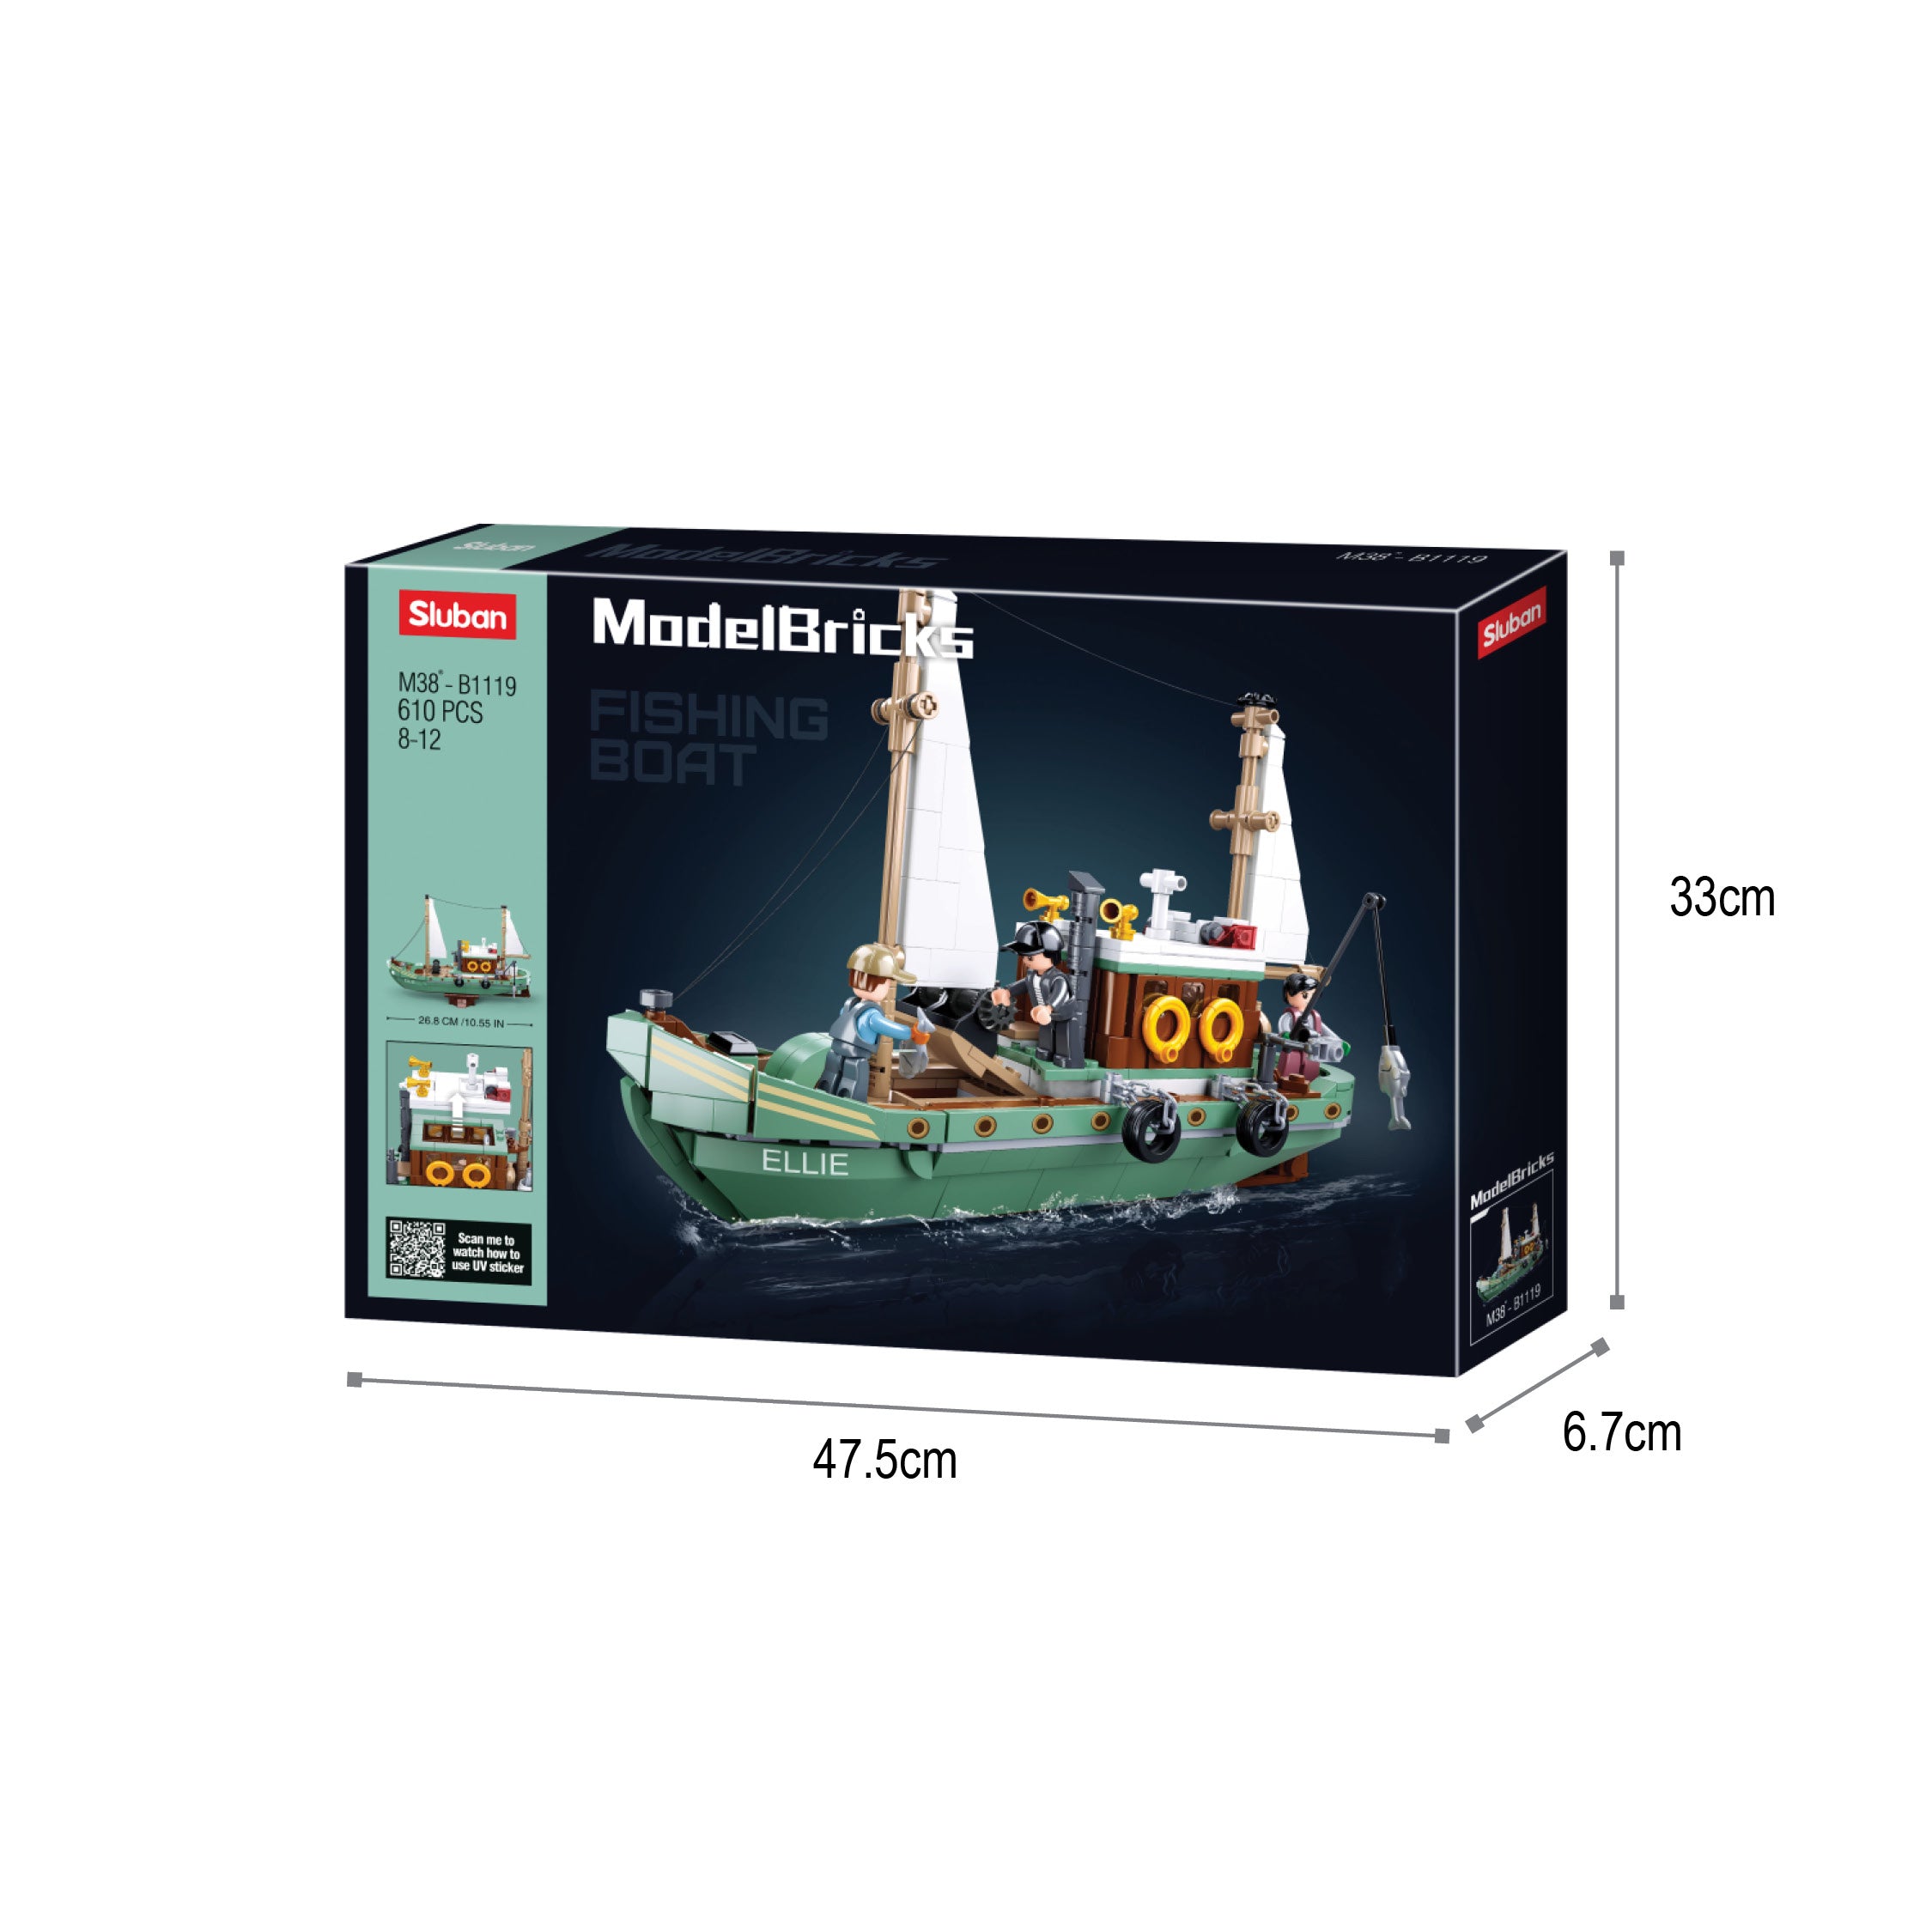 SLUBAN® MODELBRICKS-Fishing-Boat 610pcs (M38-B1119) Building Blocks Kit For Boys And  Girls Aged 8 Years And Above Creative Construction Set Educational  STEM Toy